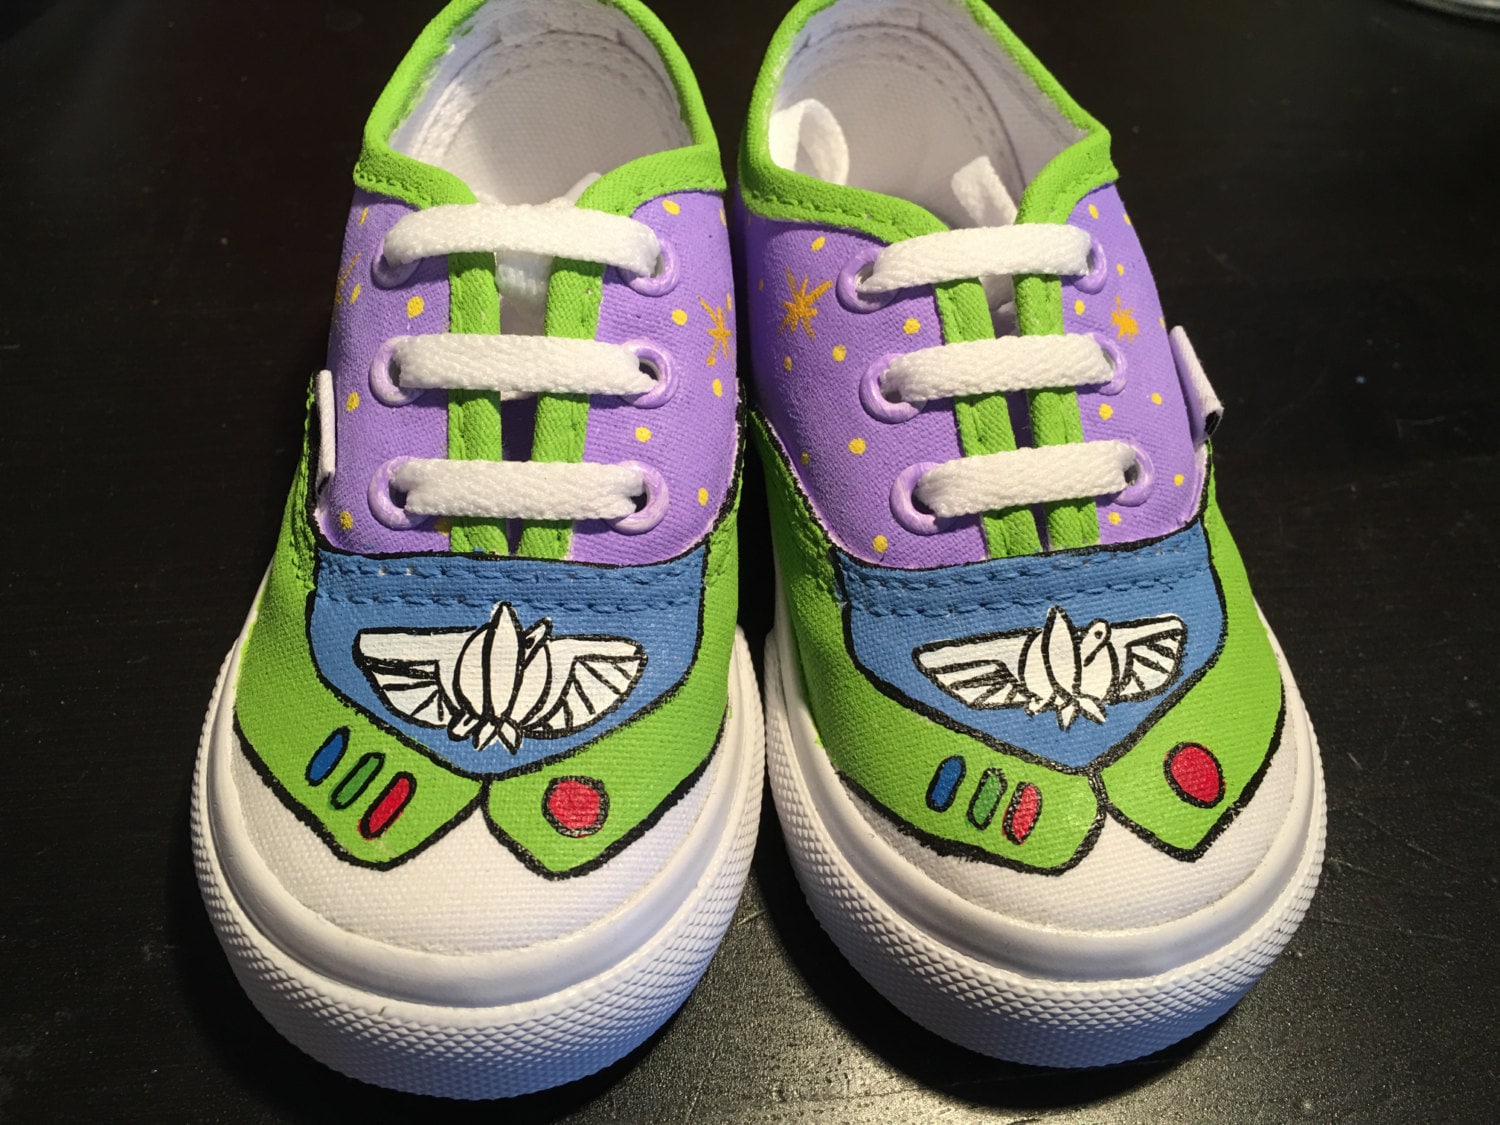 Buzz Lightyear Shoes